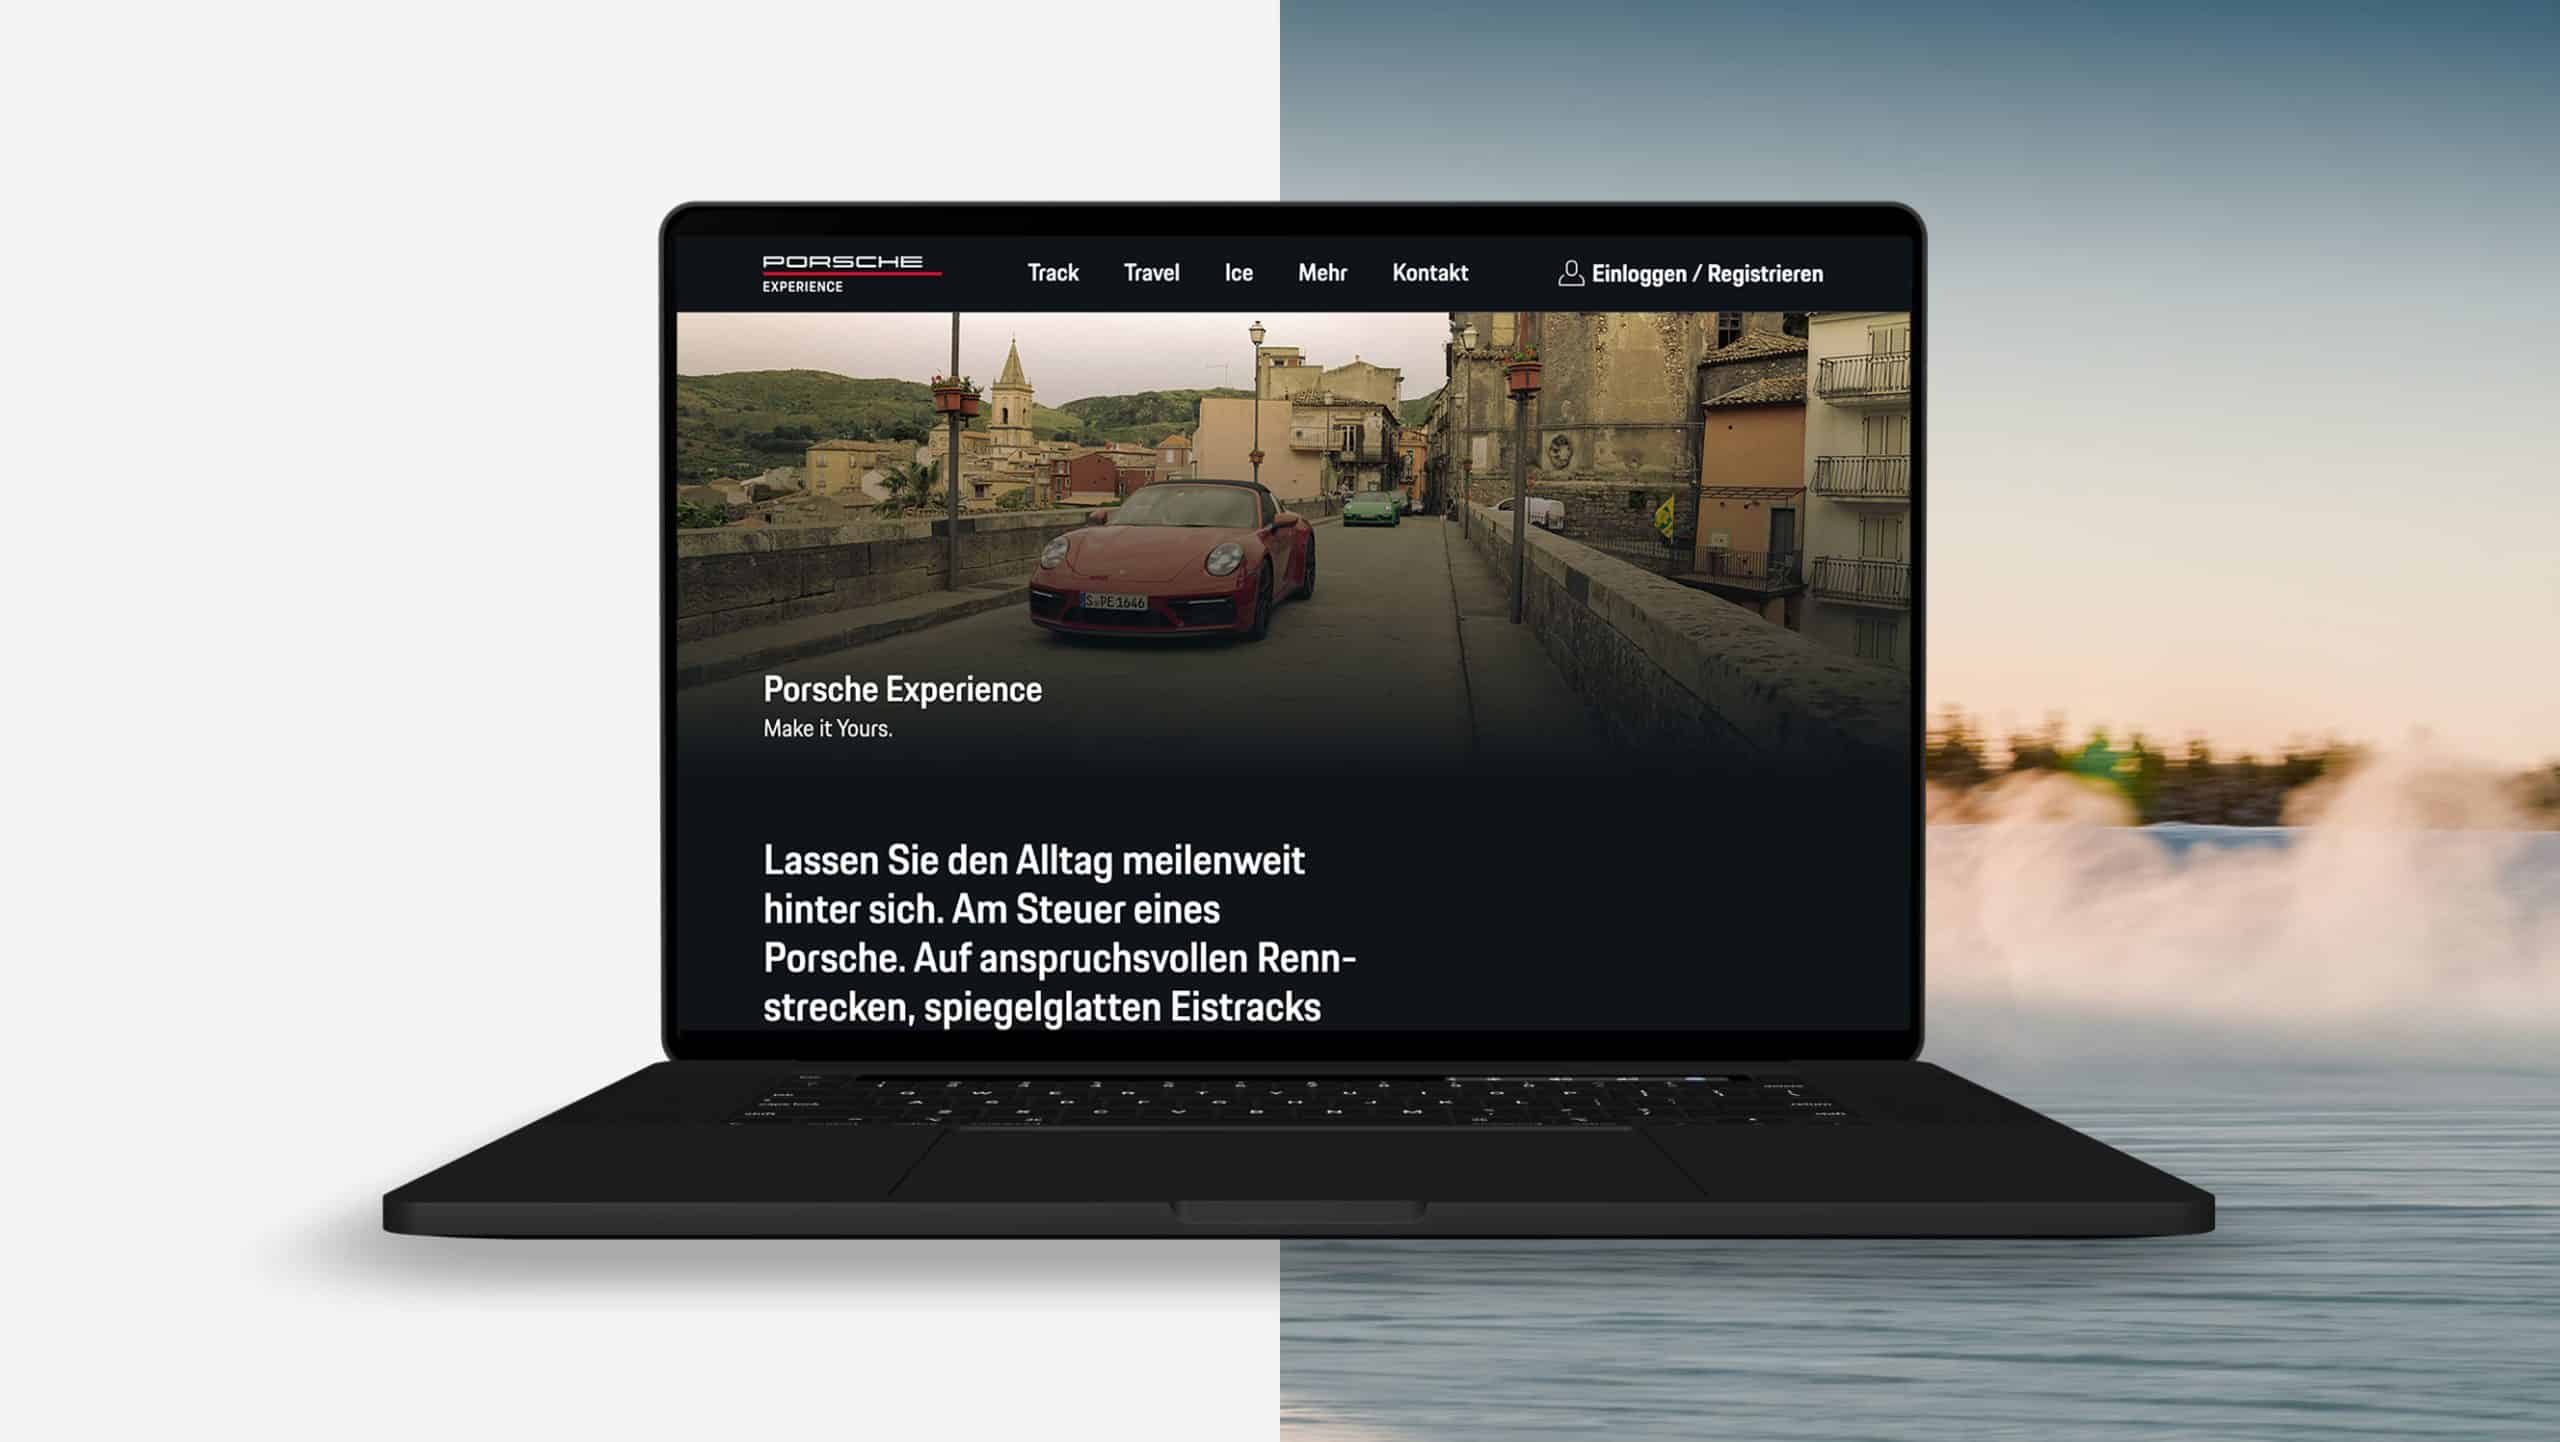 Porsche Experience platform shown on laptop